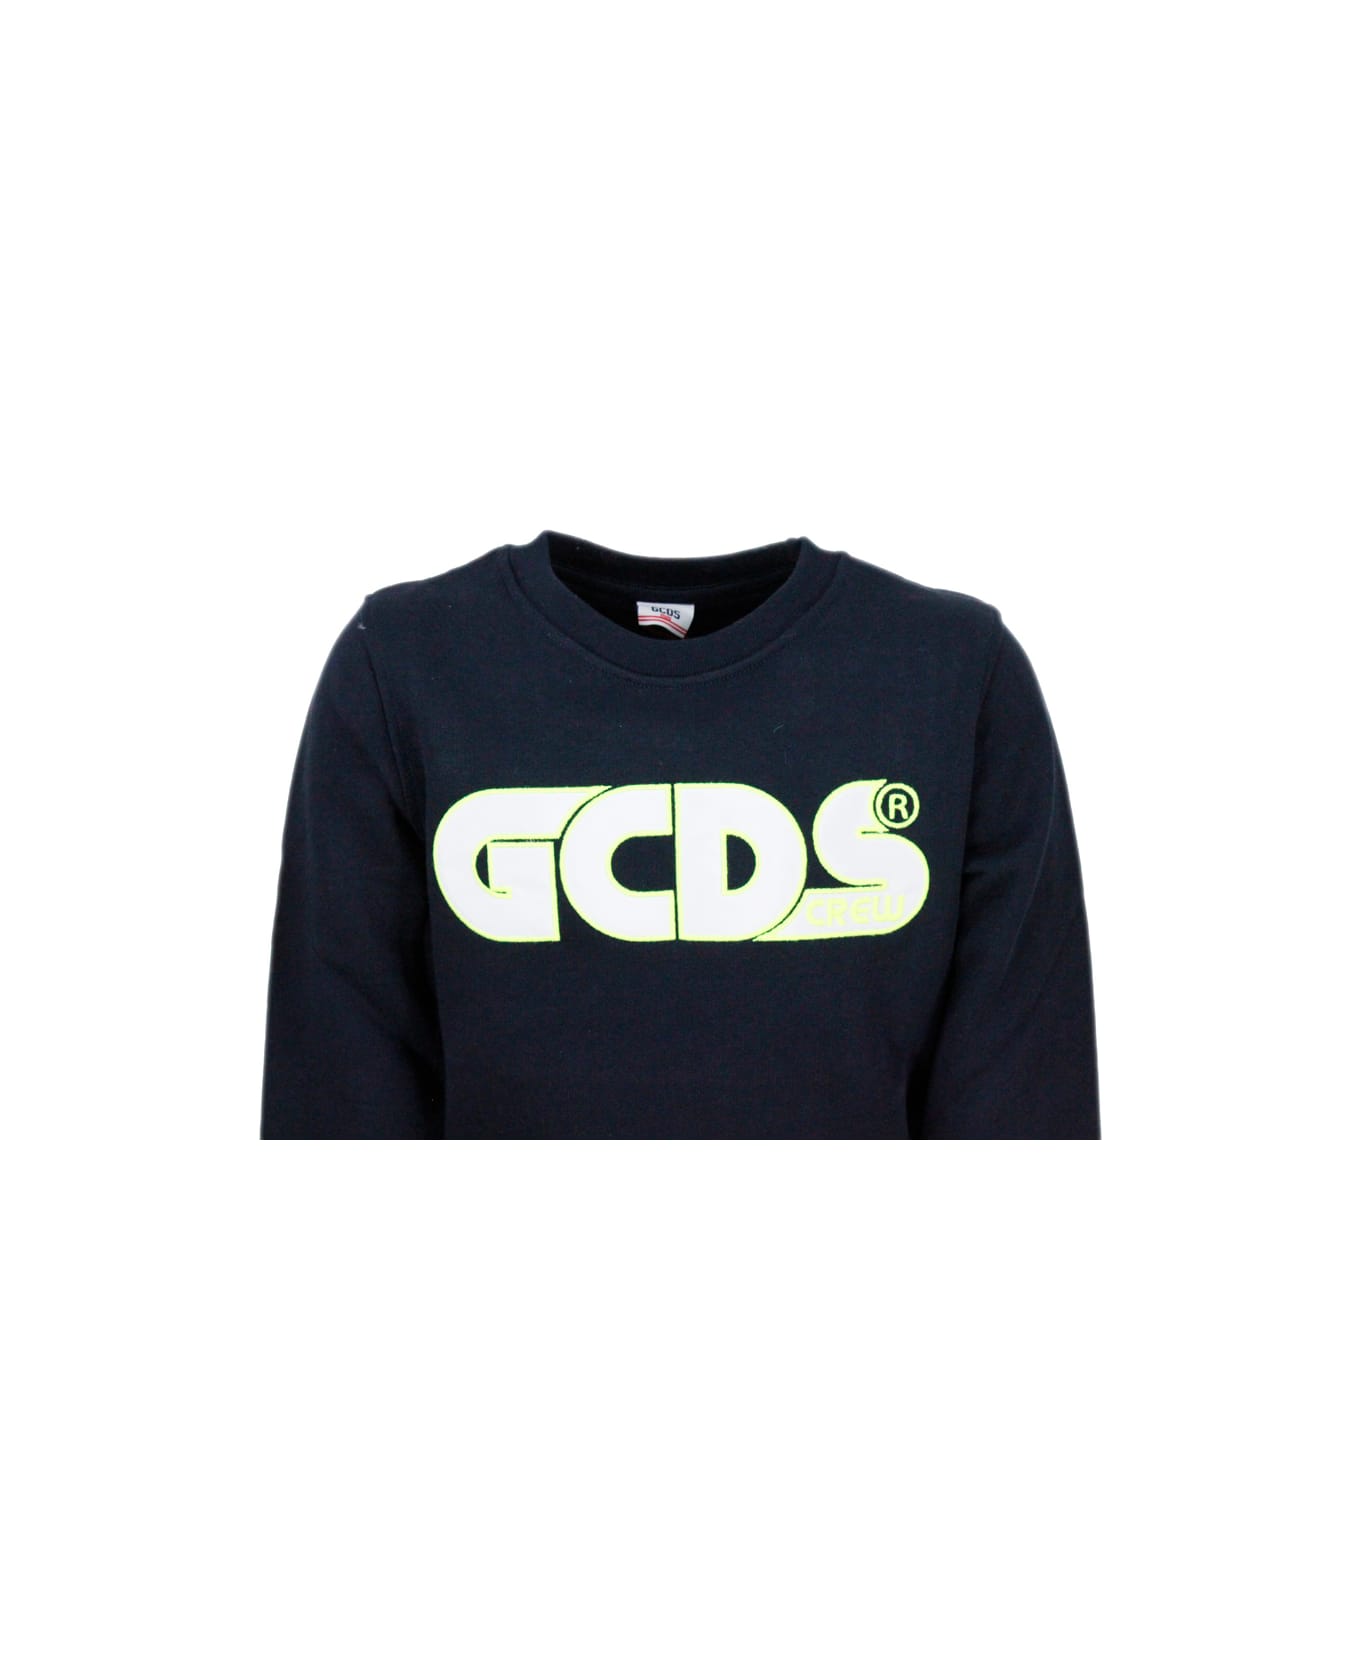 GCDS Crewneck Sweatshirt With Writing With Fluorescent Profiles - Blu